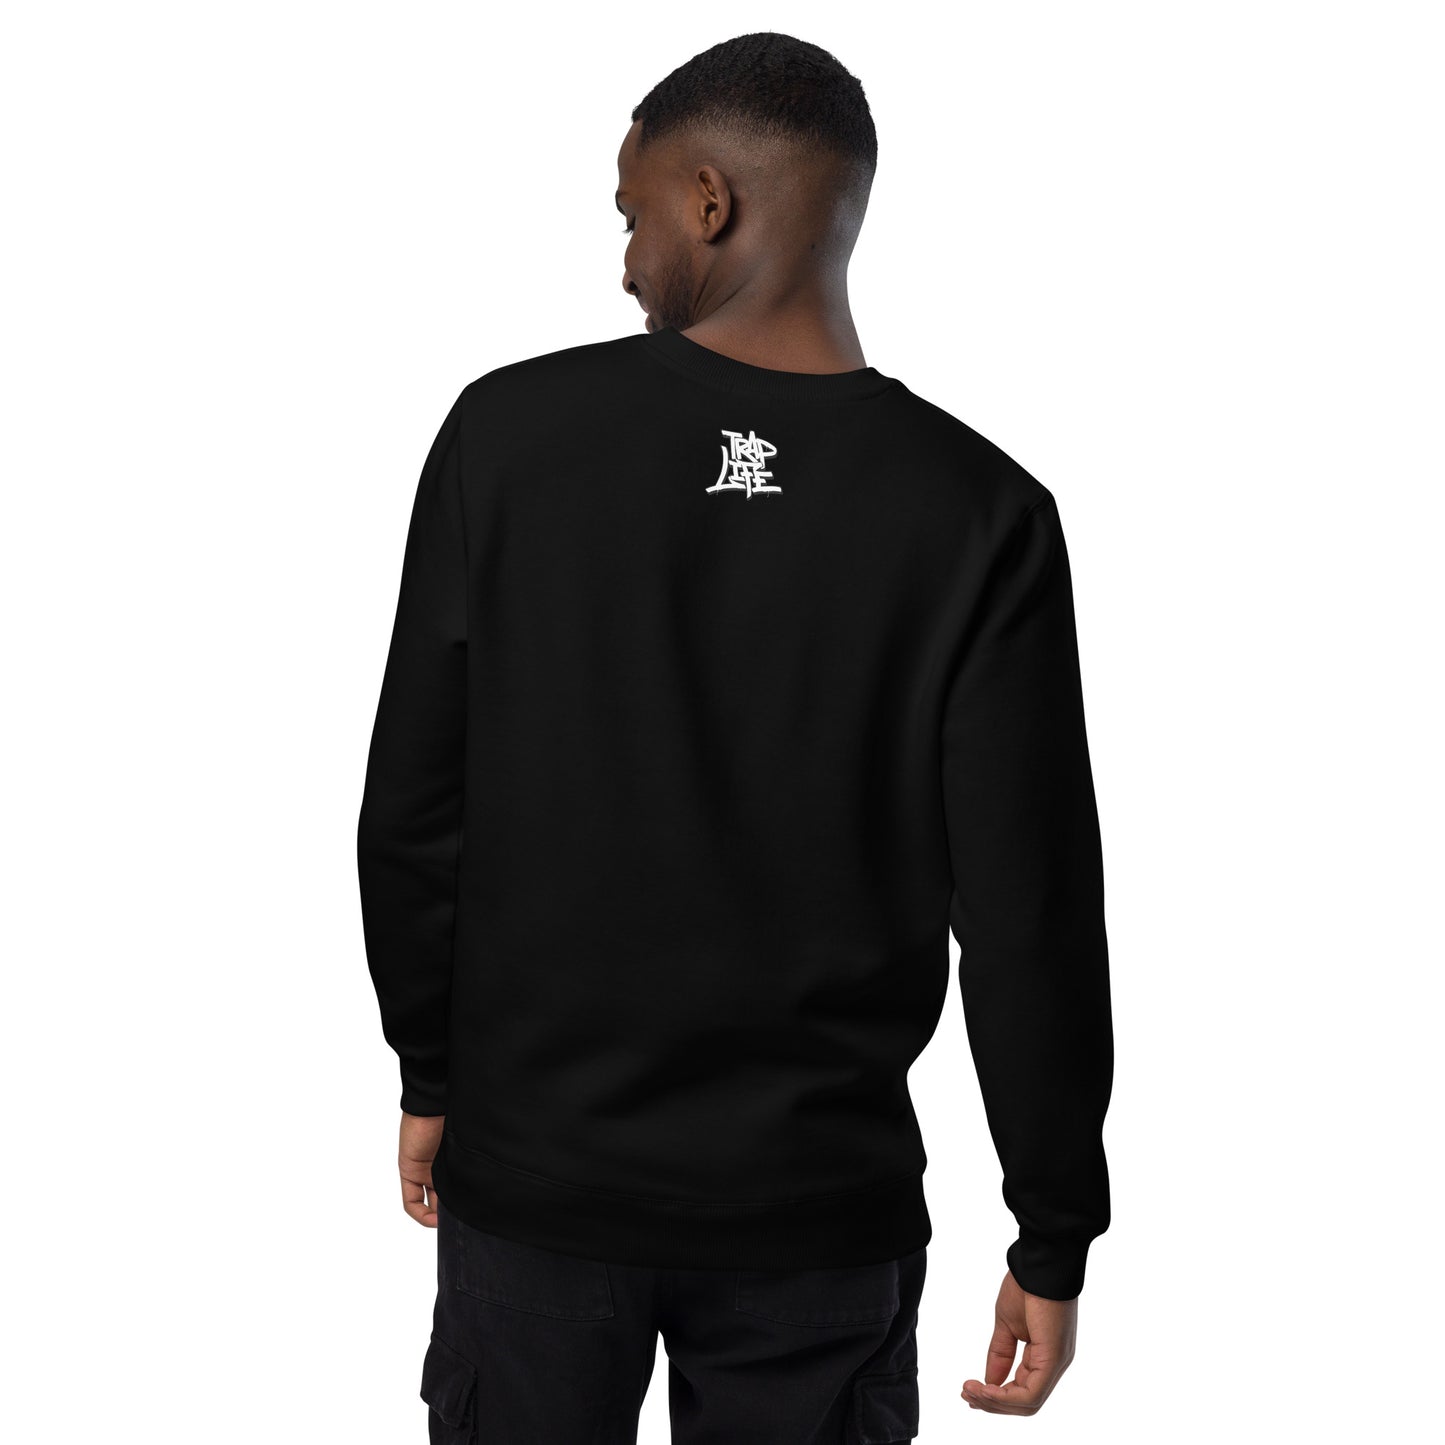 Trap Wrap Fitted Unisex fashion sweatshirt